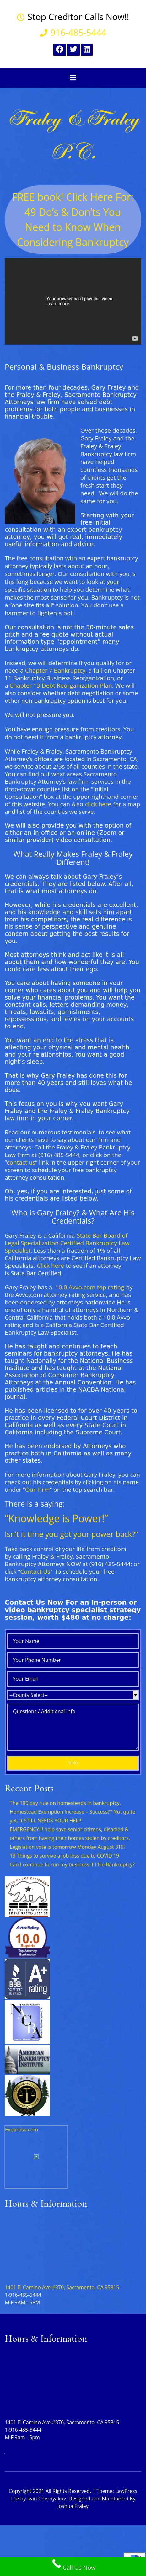 Fraley & Fraley, Sacramento Bankruptcy Attorneys - Sacramento CA Lawyers